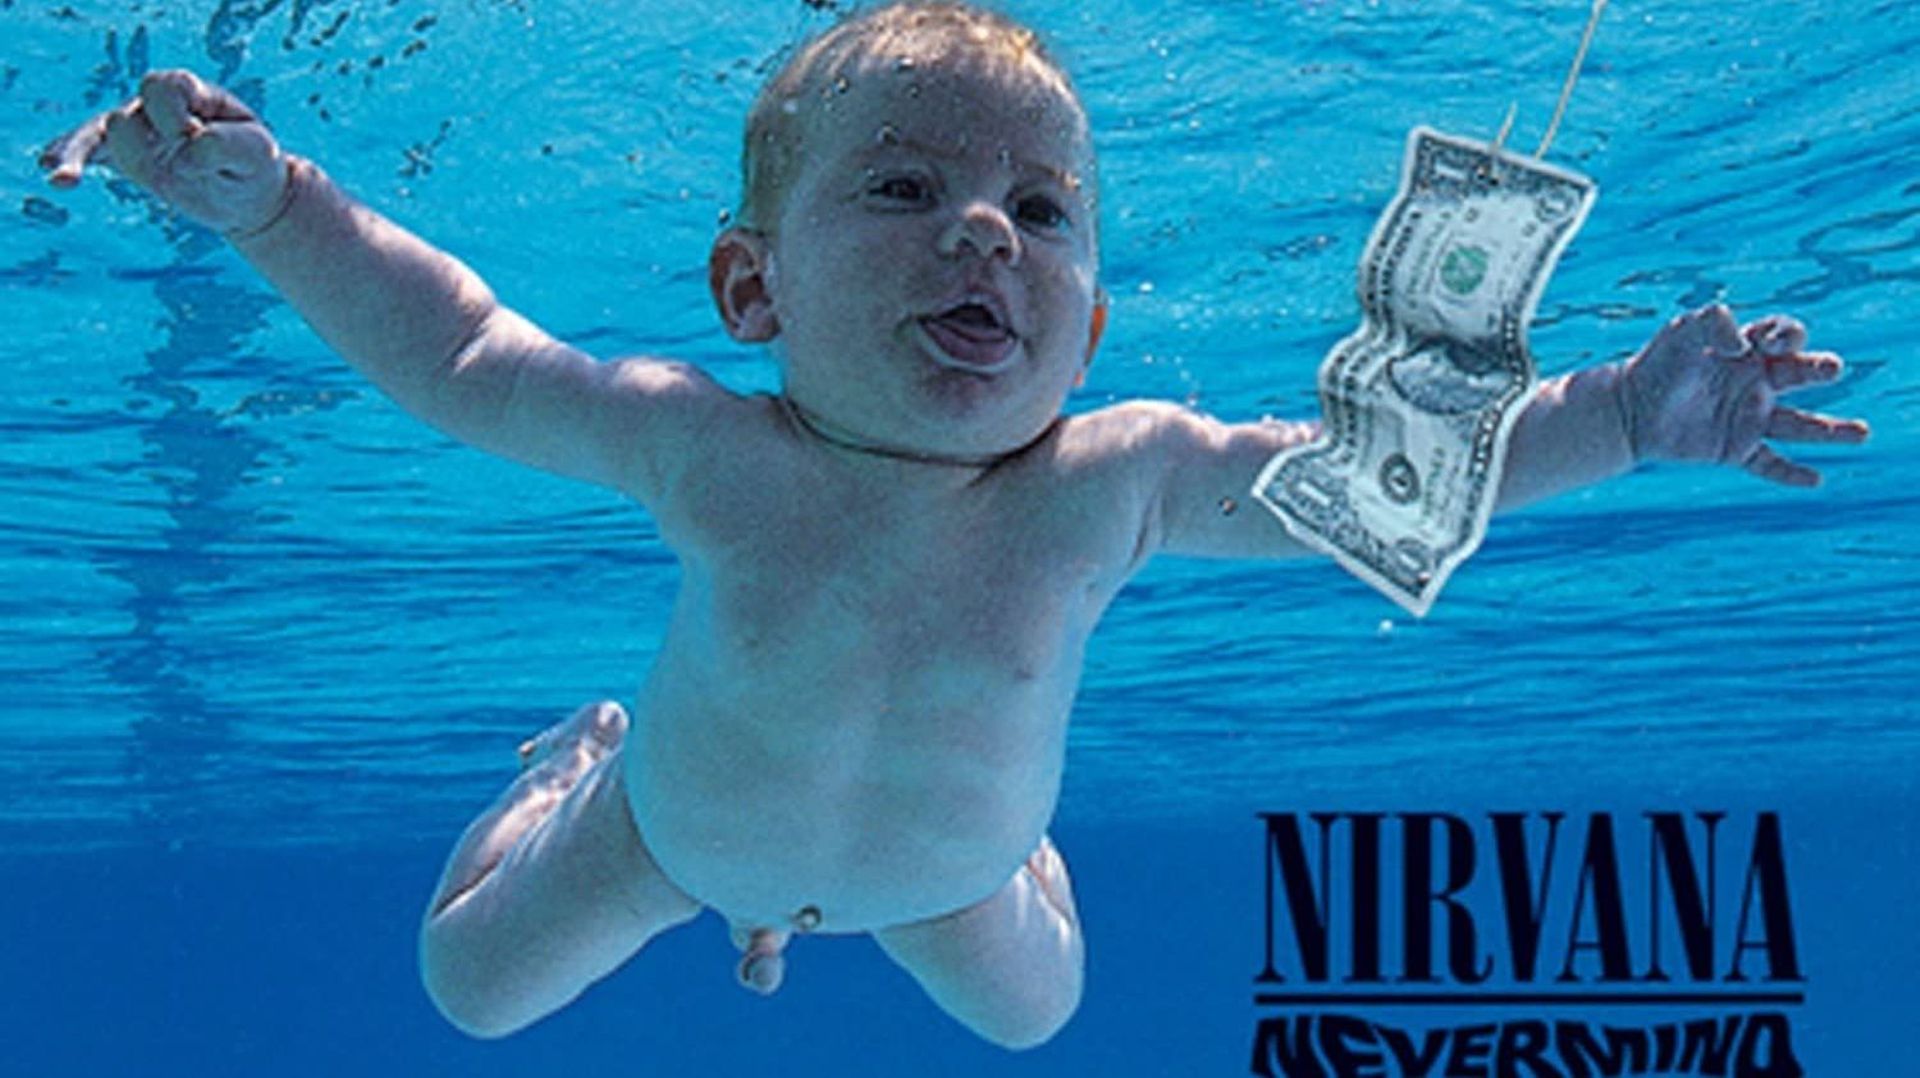 L'album "Nevermind" de Nirvana sorti en 1991